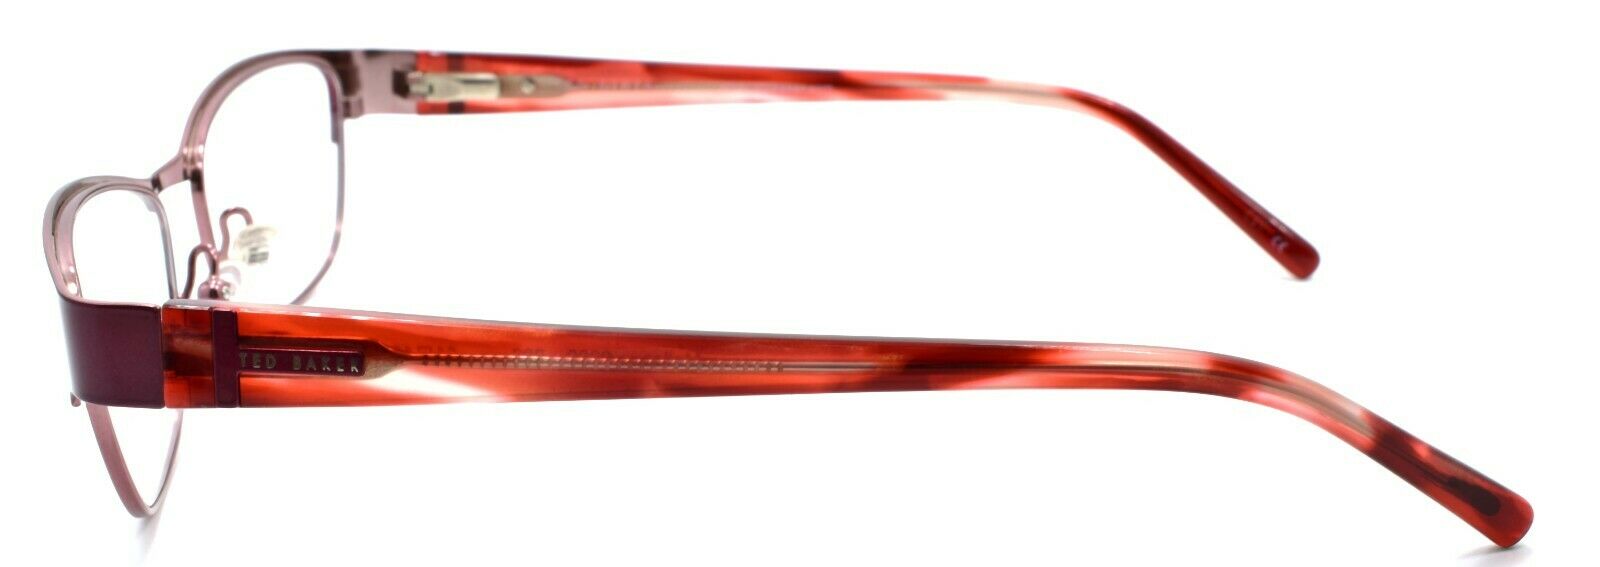 3-Ted Baker Mellor 2209 223 Women's Eyeglasses Frames 51-16-135 Pearl Red-4894327037025-IKSpecs